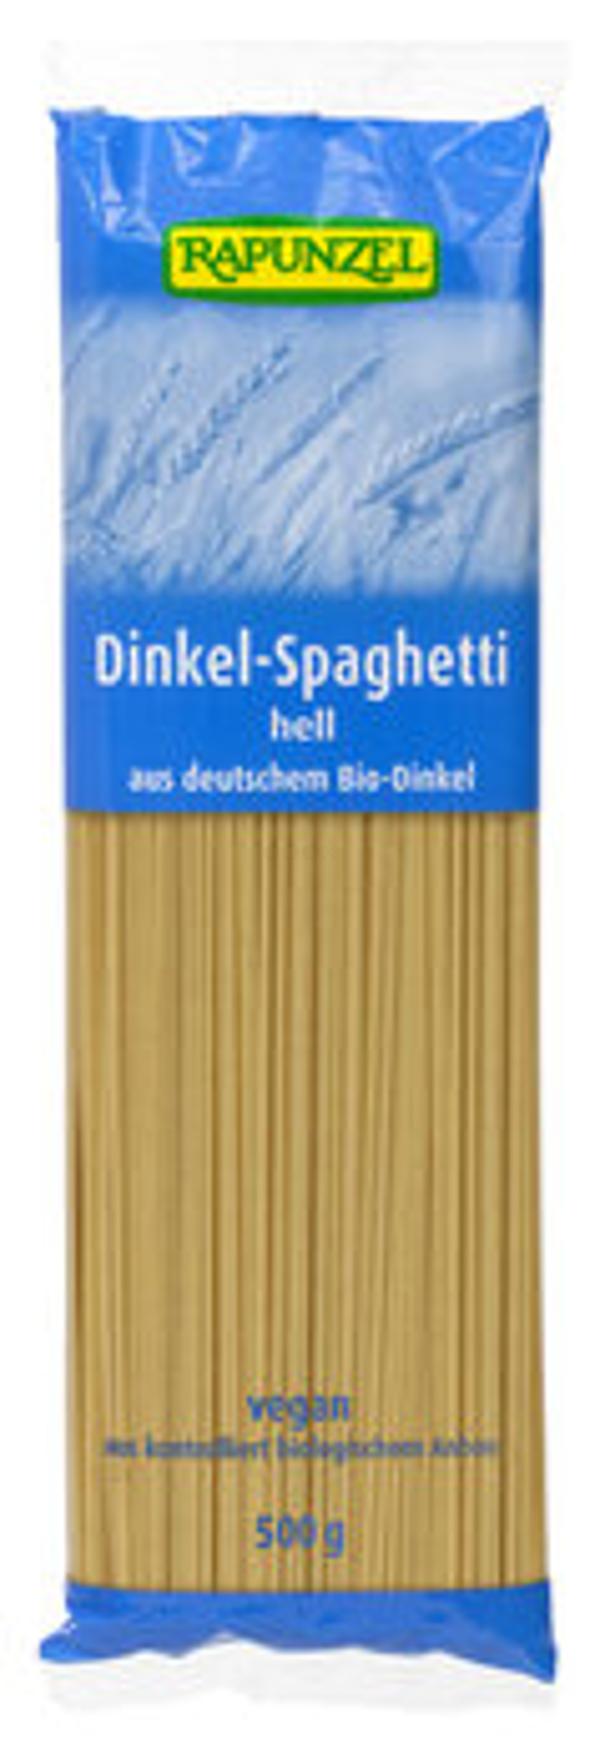 Produktfoto zu Dinkel-Spaghetti hell, 500 g